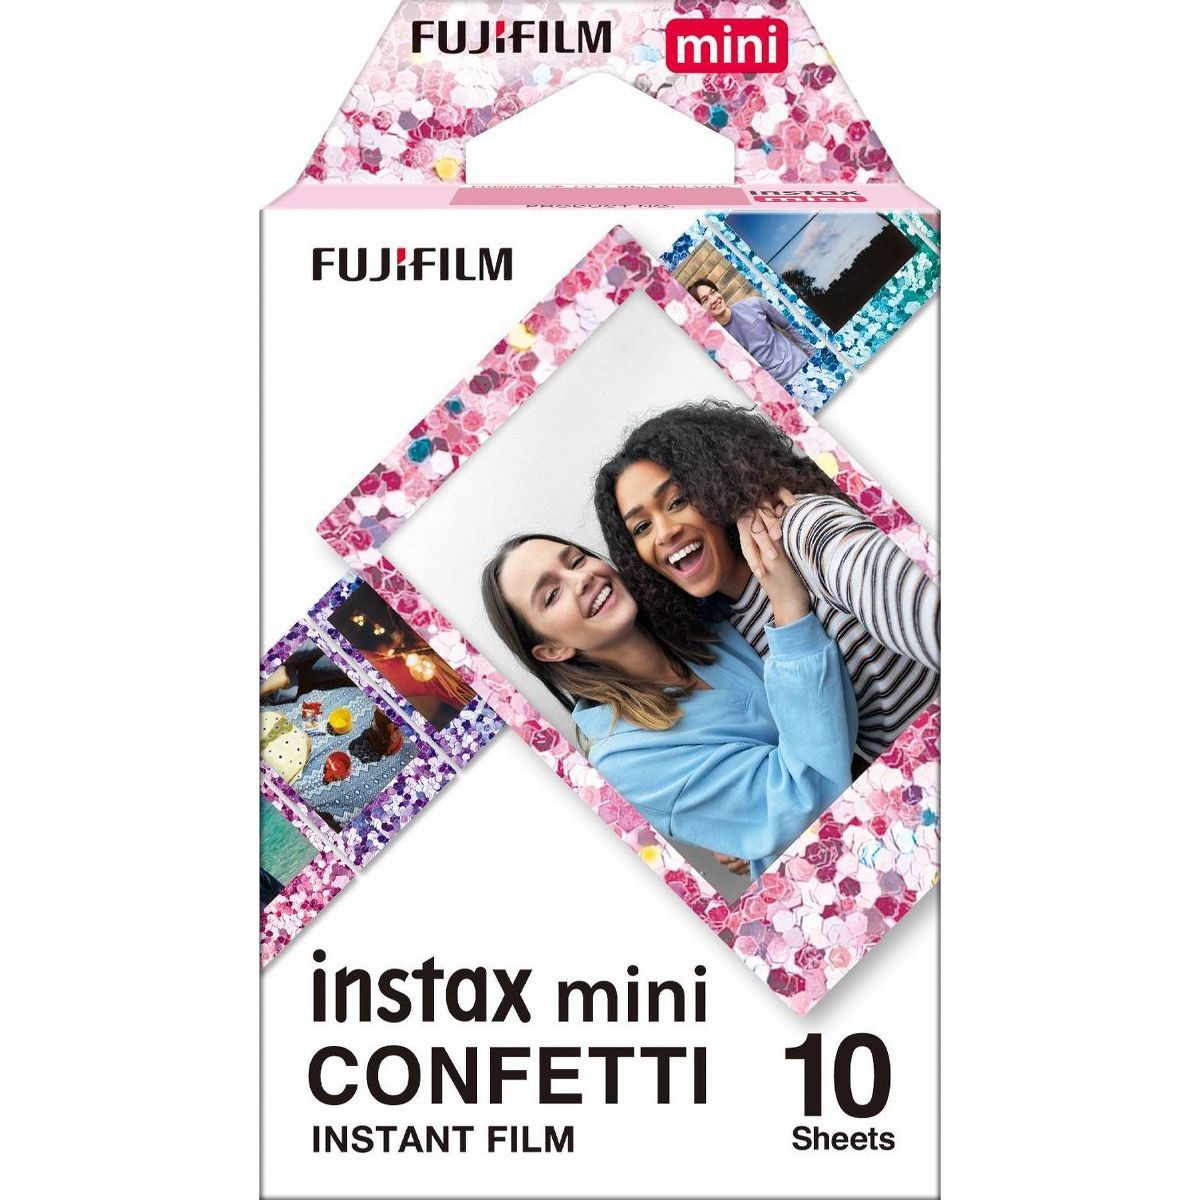 Fujifilm INSTAX MINI Confetti Instant Film - 10ct | Target